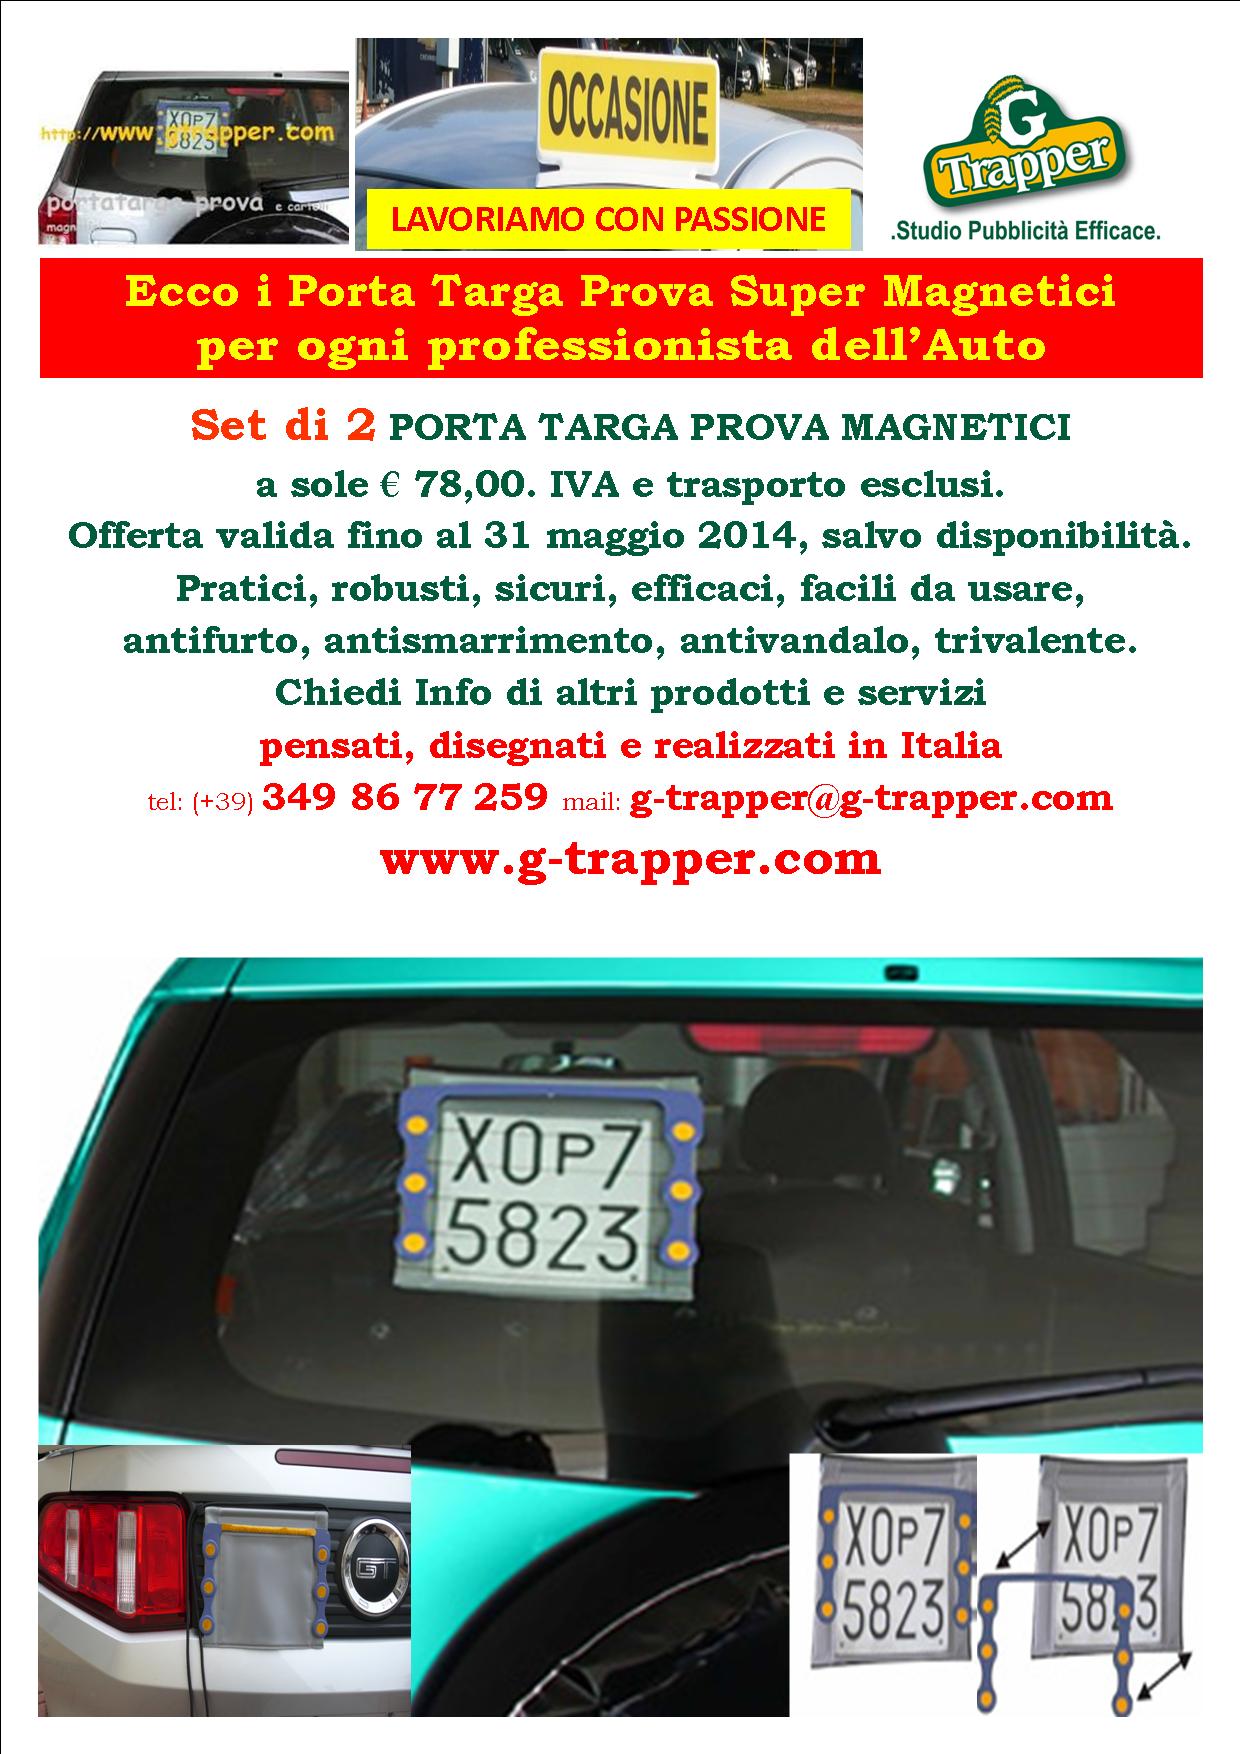 http://www.g-trapper.com/wp-content/uploads/2014/03/porta-targa-prova-magnetici-2-pezzi-www.g-trapper.com-tel-3498677259.jpg